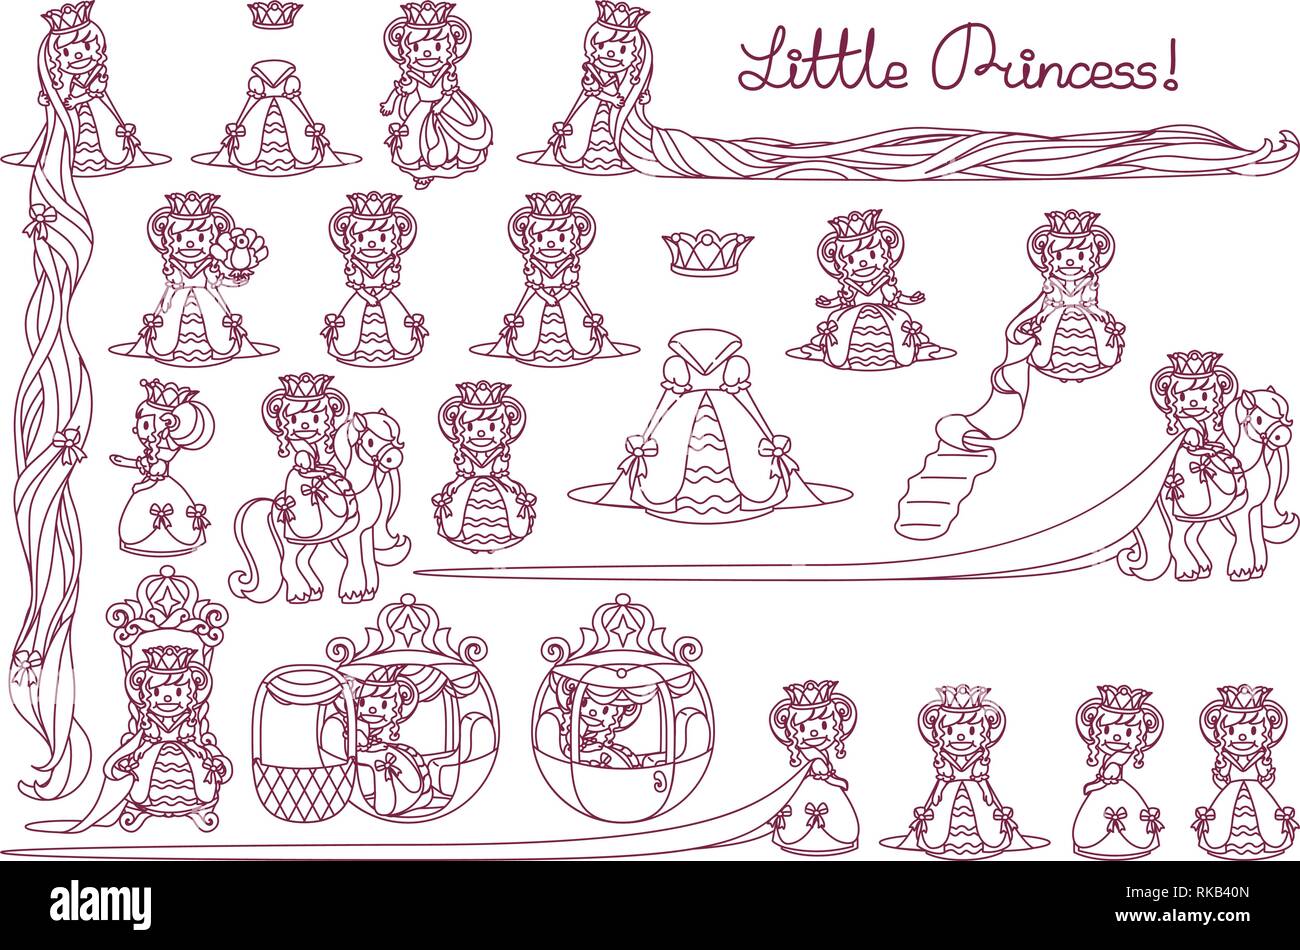 vector Little Princess set, line queen collection Stock Vector